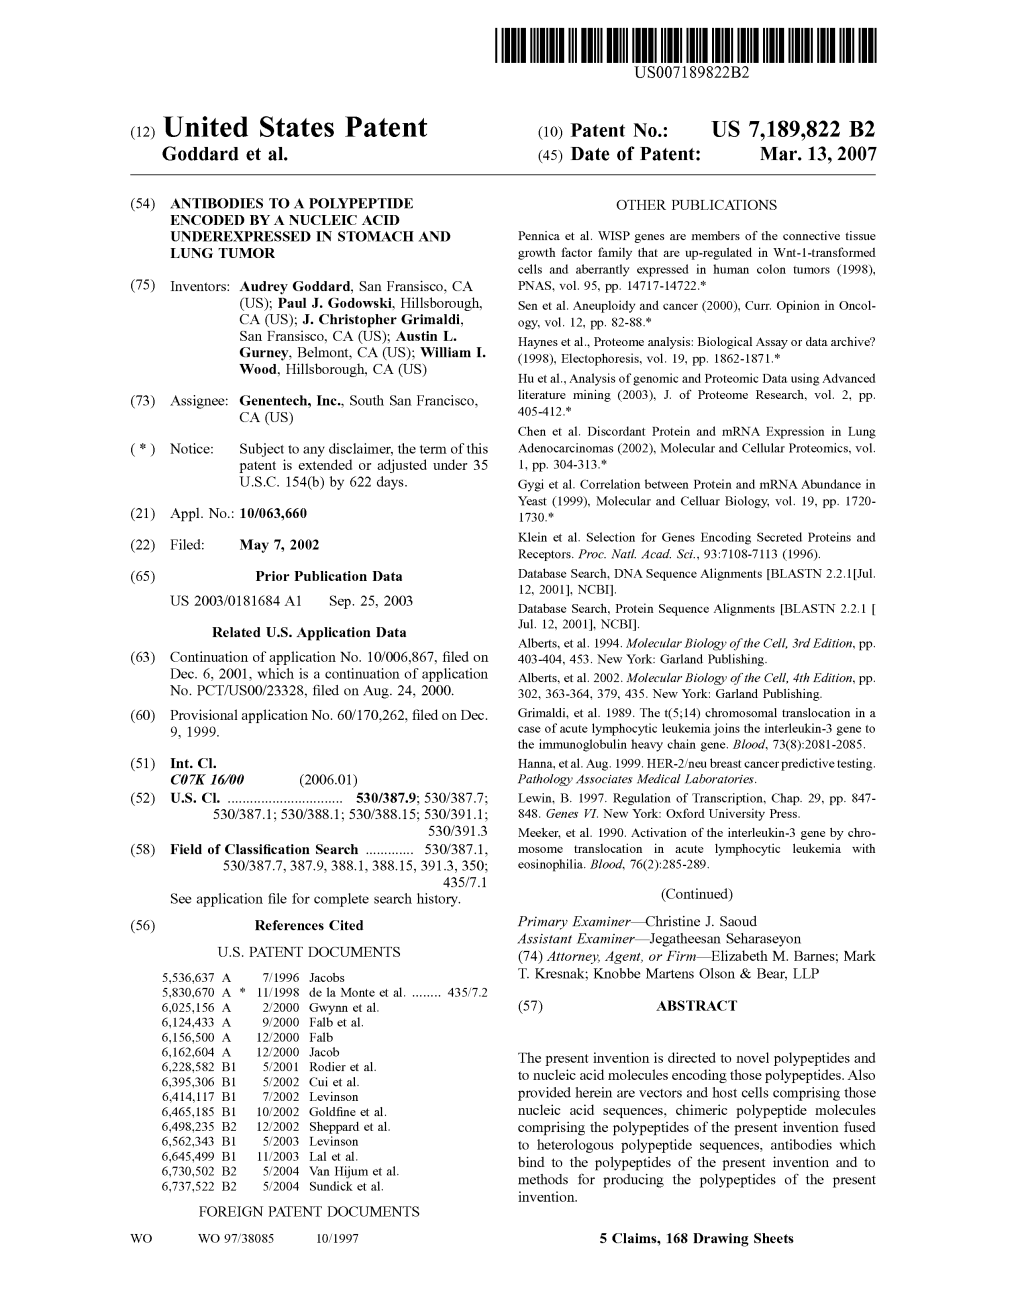 United States Patent (10) Patent No.: US 7,189,822 B2 Goddard Et Al